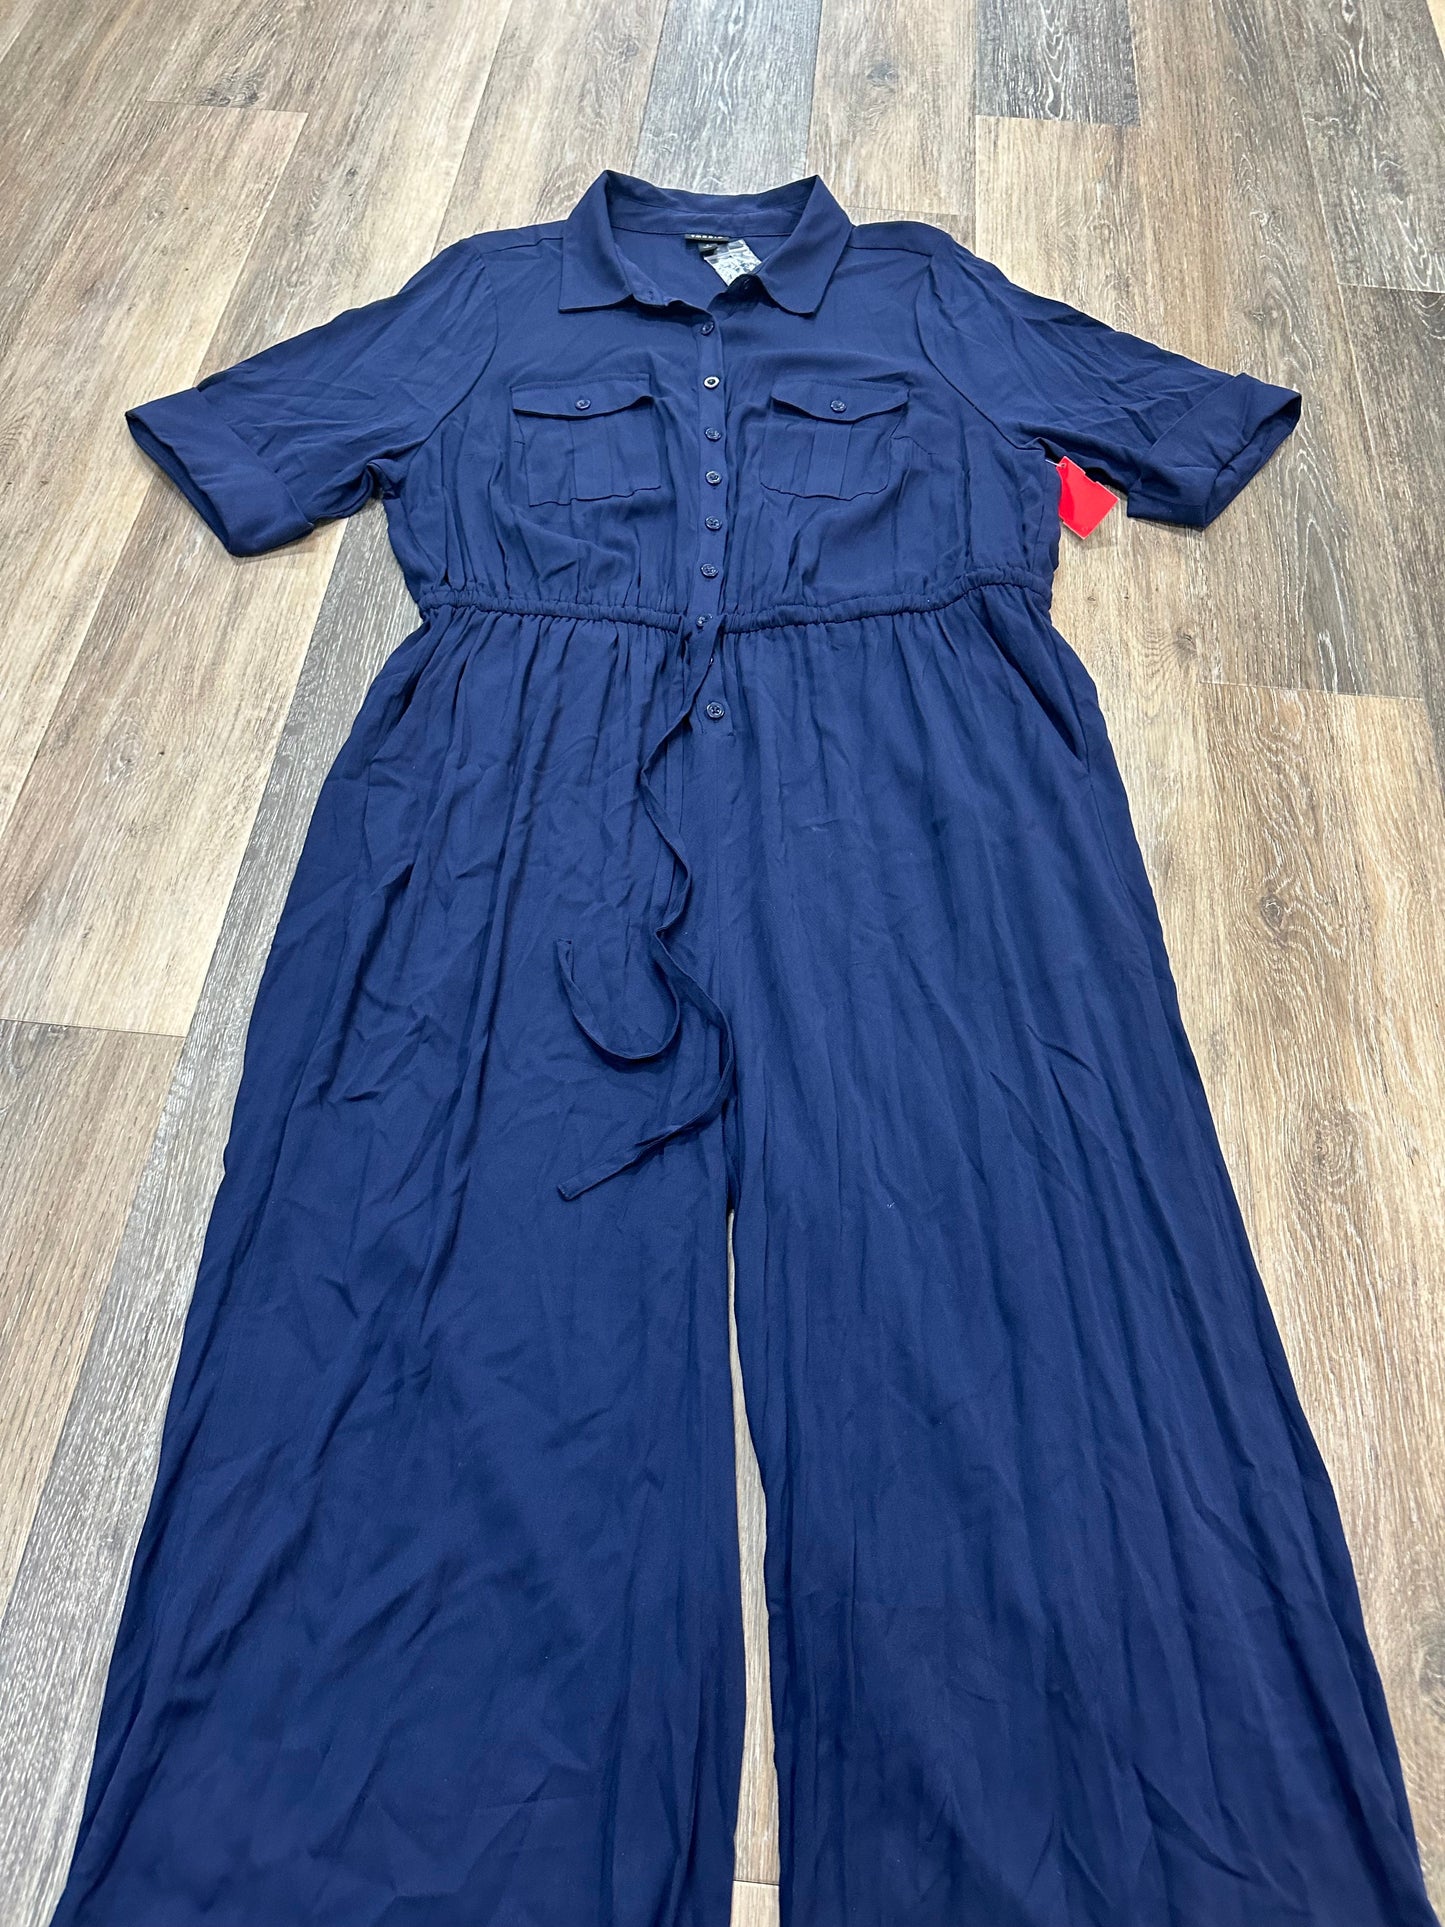 Blue Dress Casual Maxi Torrid, Size 1x